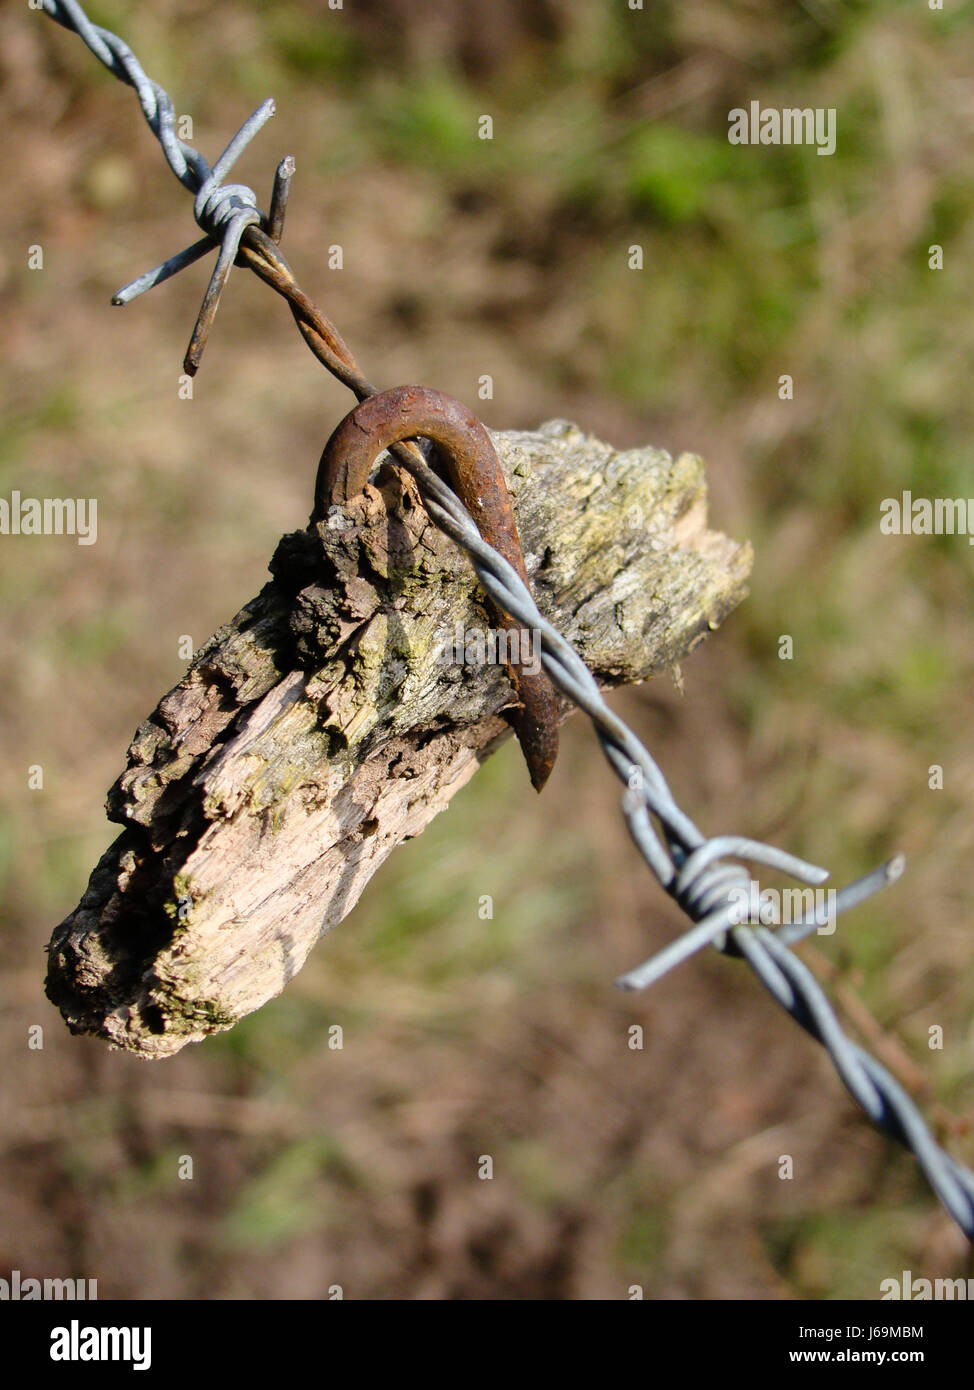 https://c8.alamy.com/comp/J69MBM/wood-fence-rusty-hook-barbed-wire-nail-nails-willow-macro-close-up-J69MBM.jpg